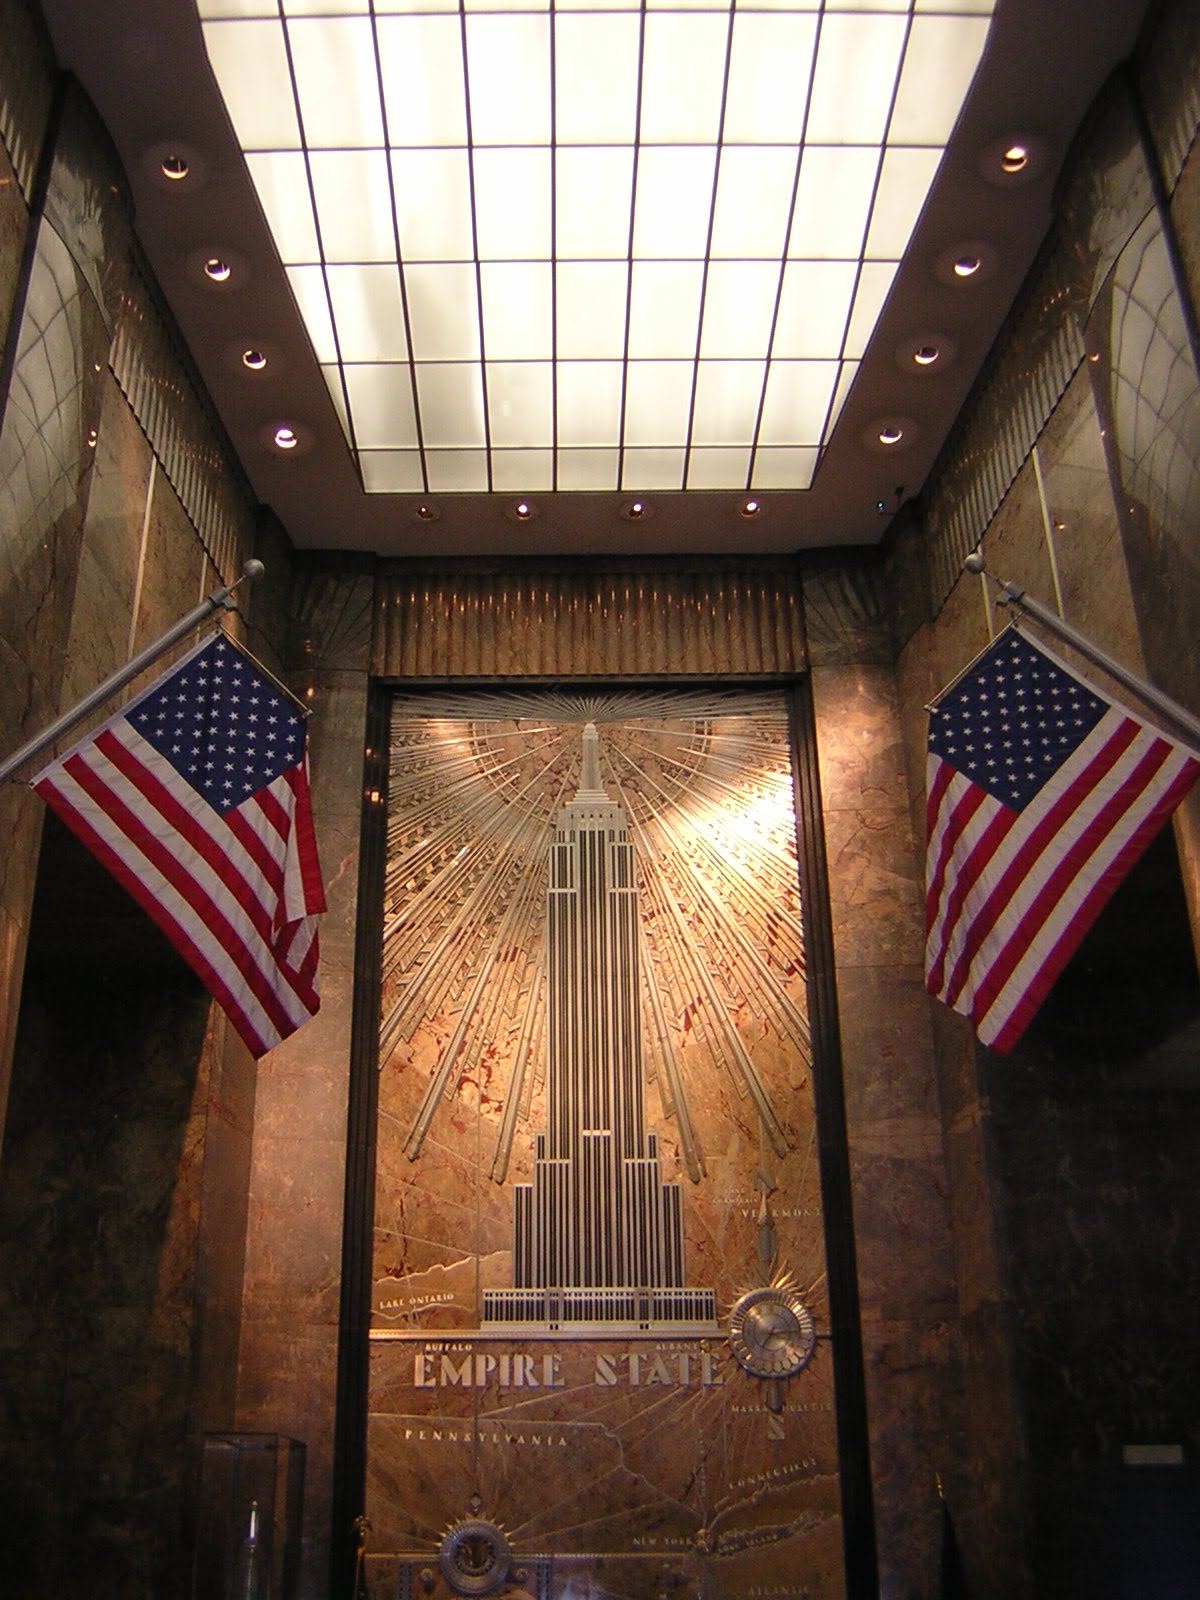 empire state building9 The Empire State Building in New York City